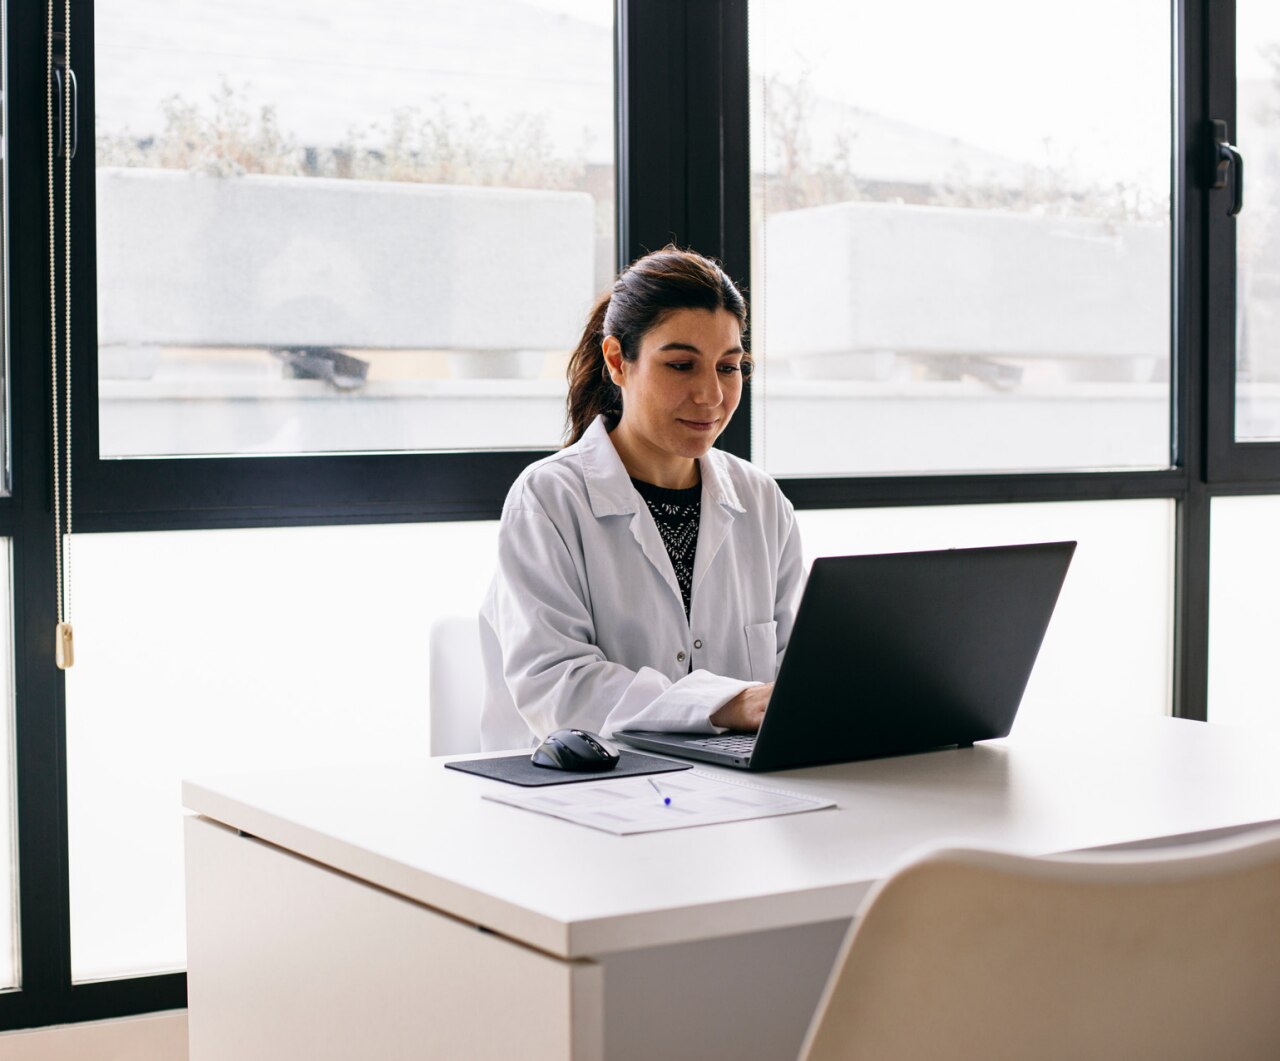 Doctor sitting at desk in medical practice using laptop